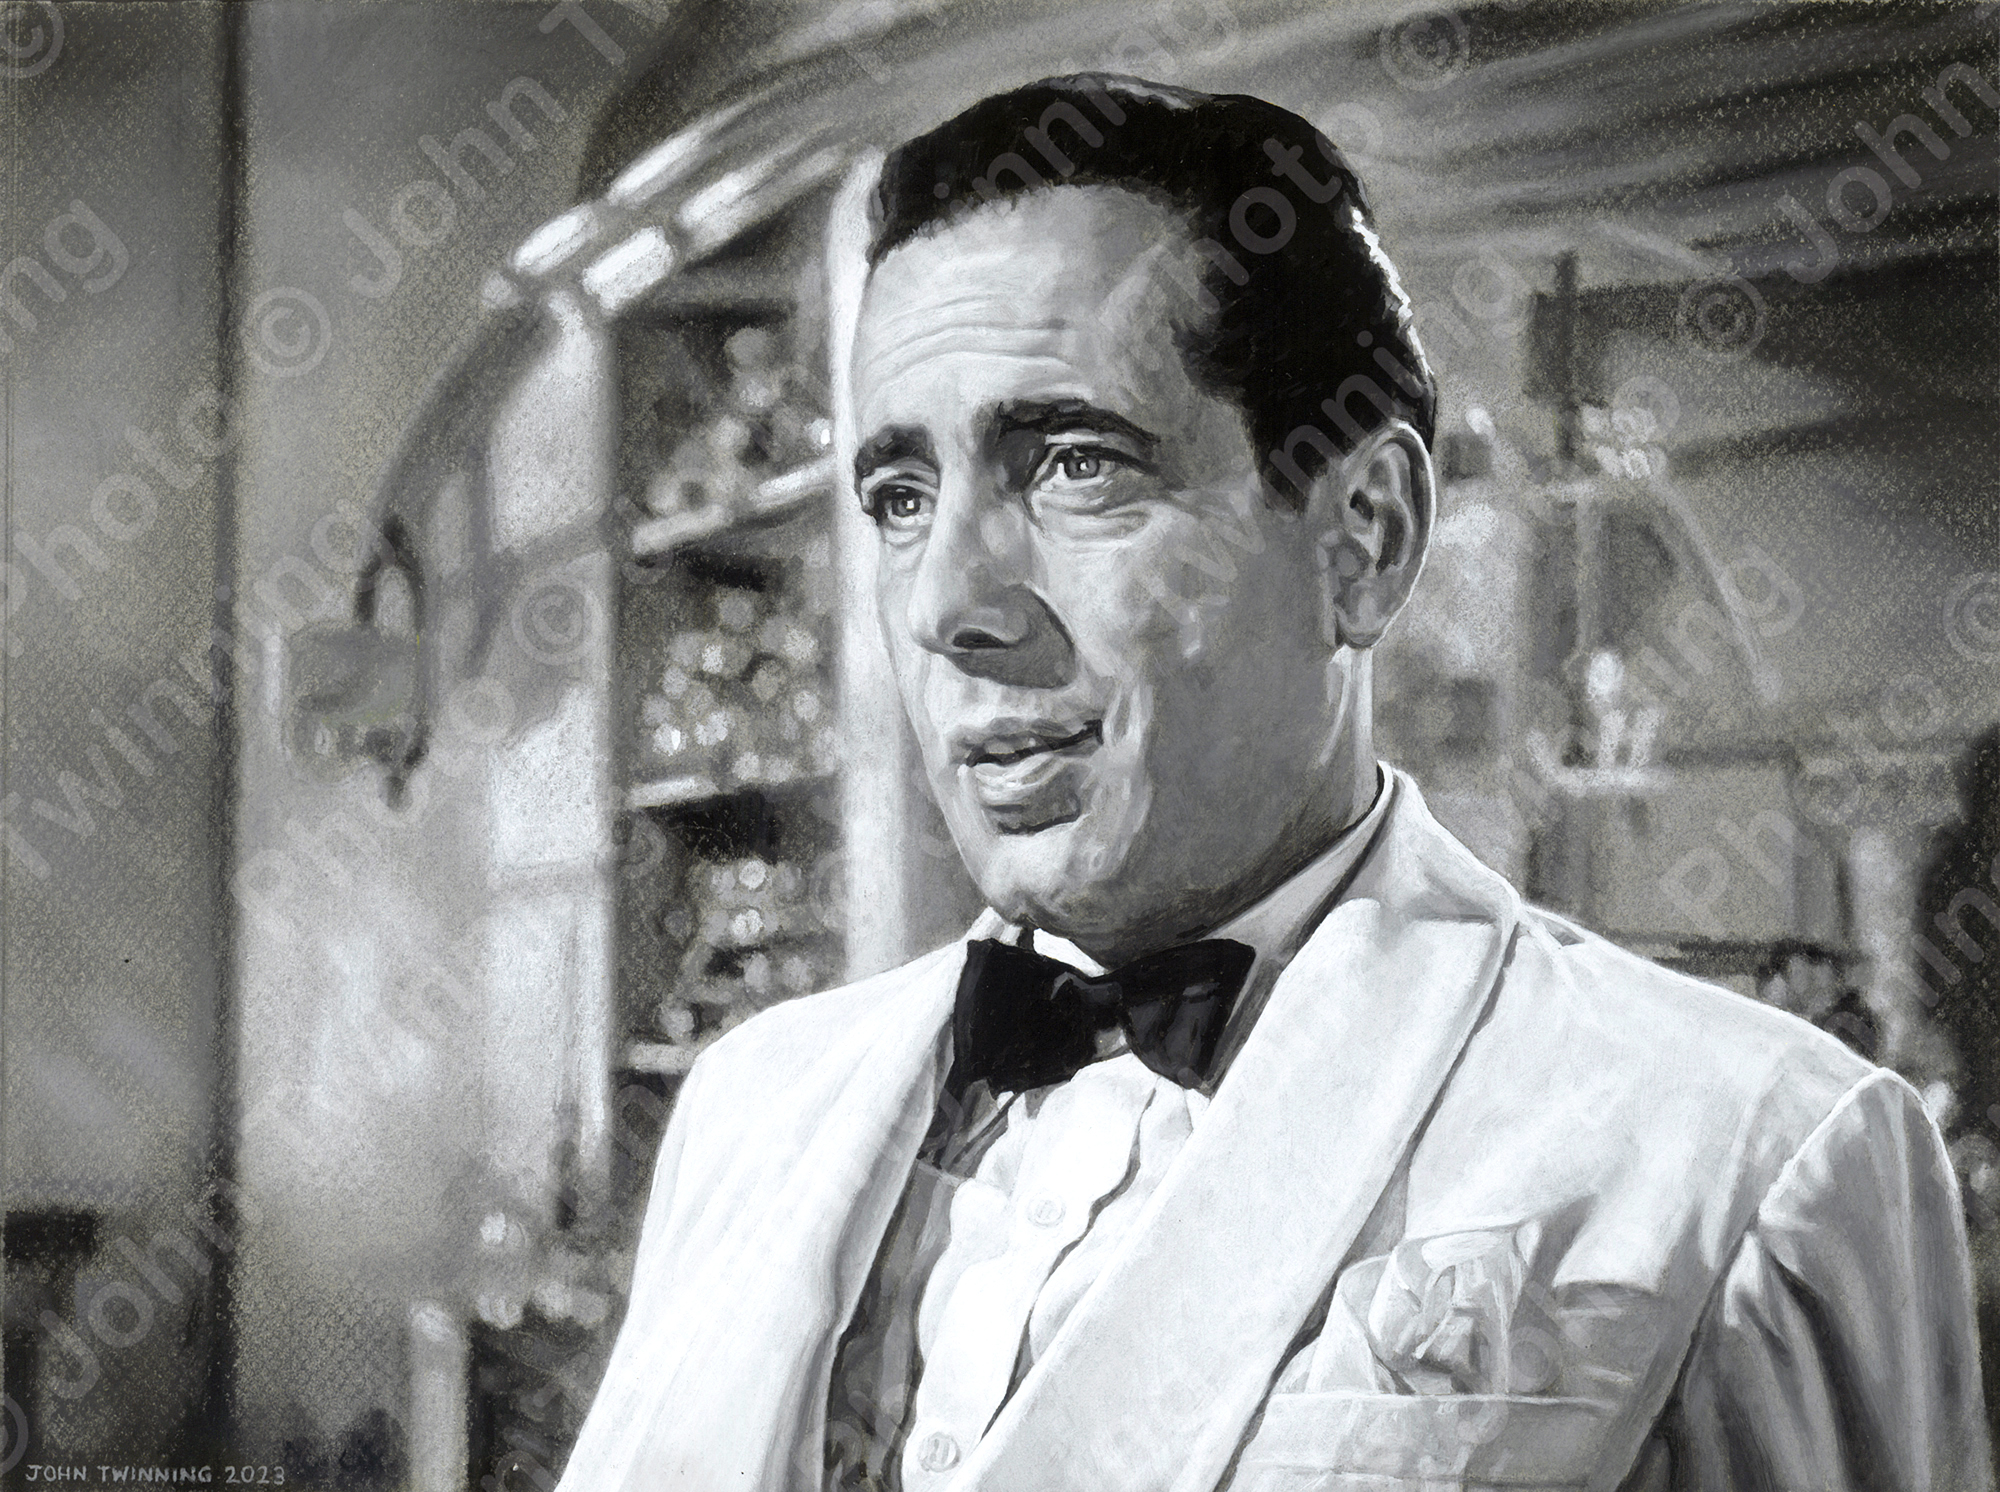 'Humphrey Bogart As Rick Blaine In Casablanca' - art print from a painting by derbyshire portrait artist john twinning